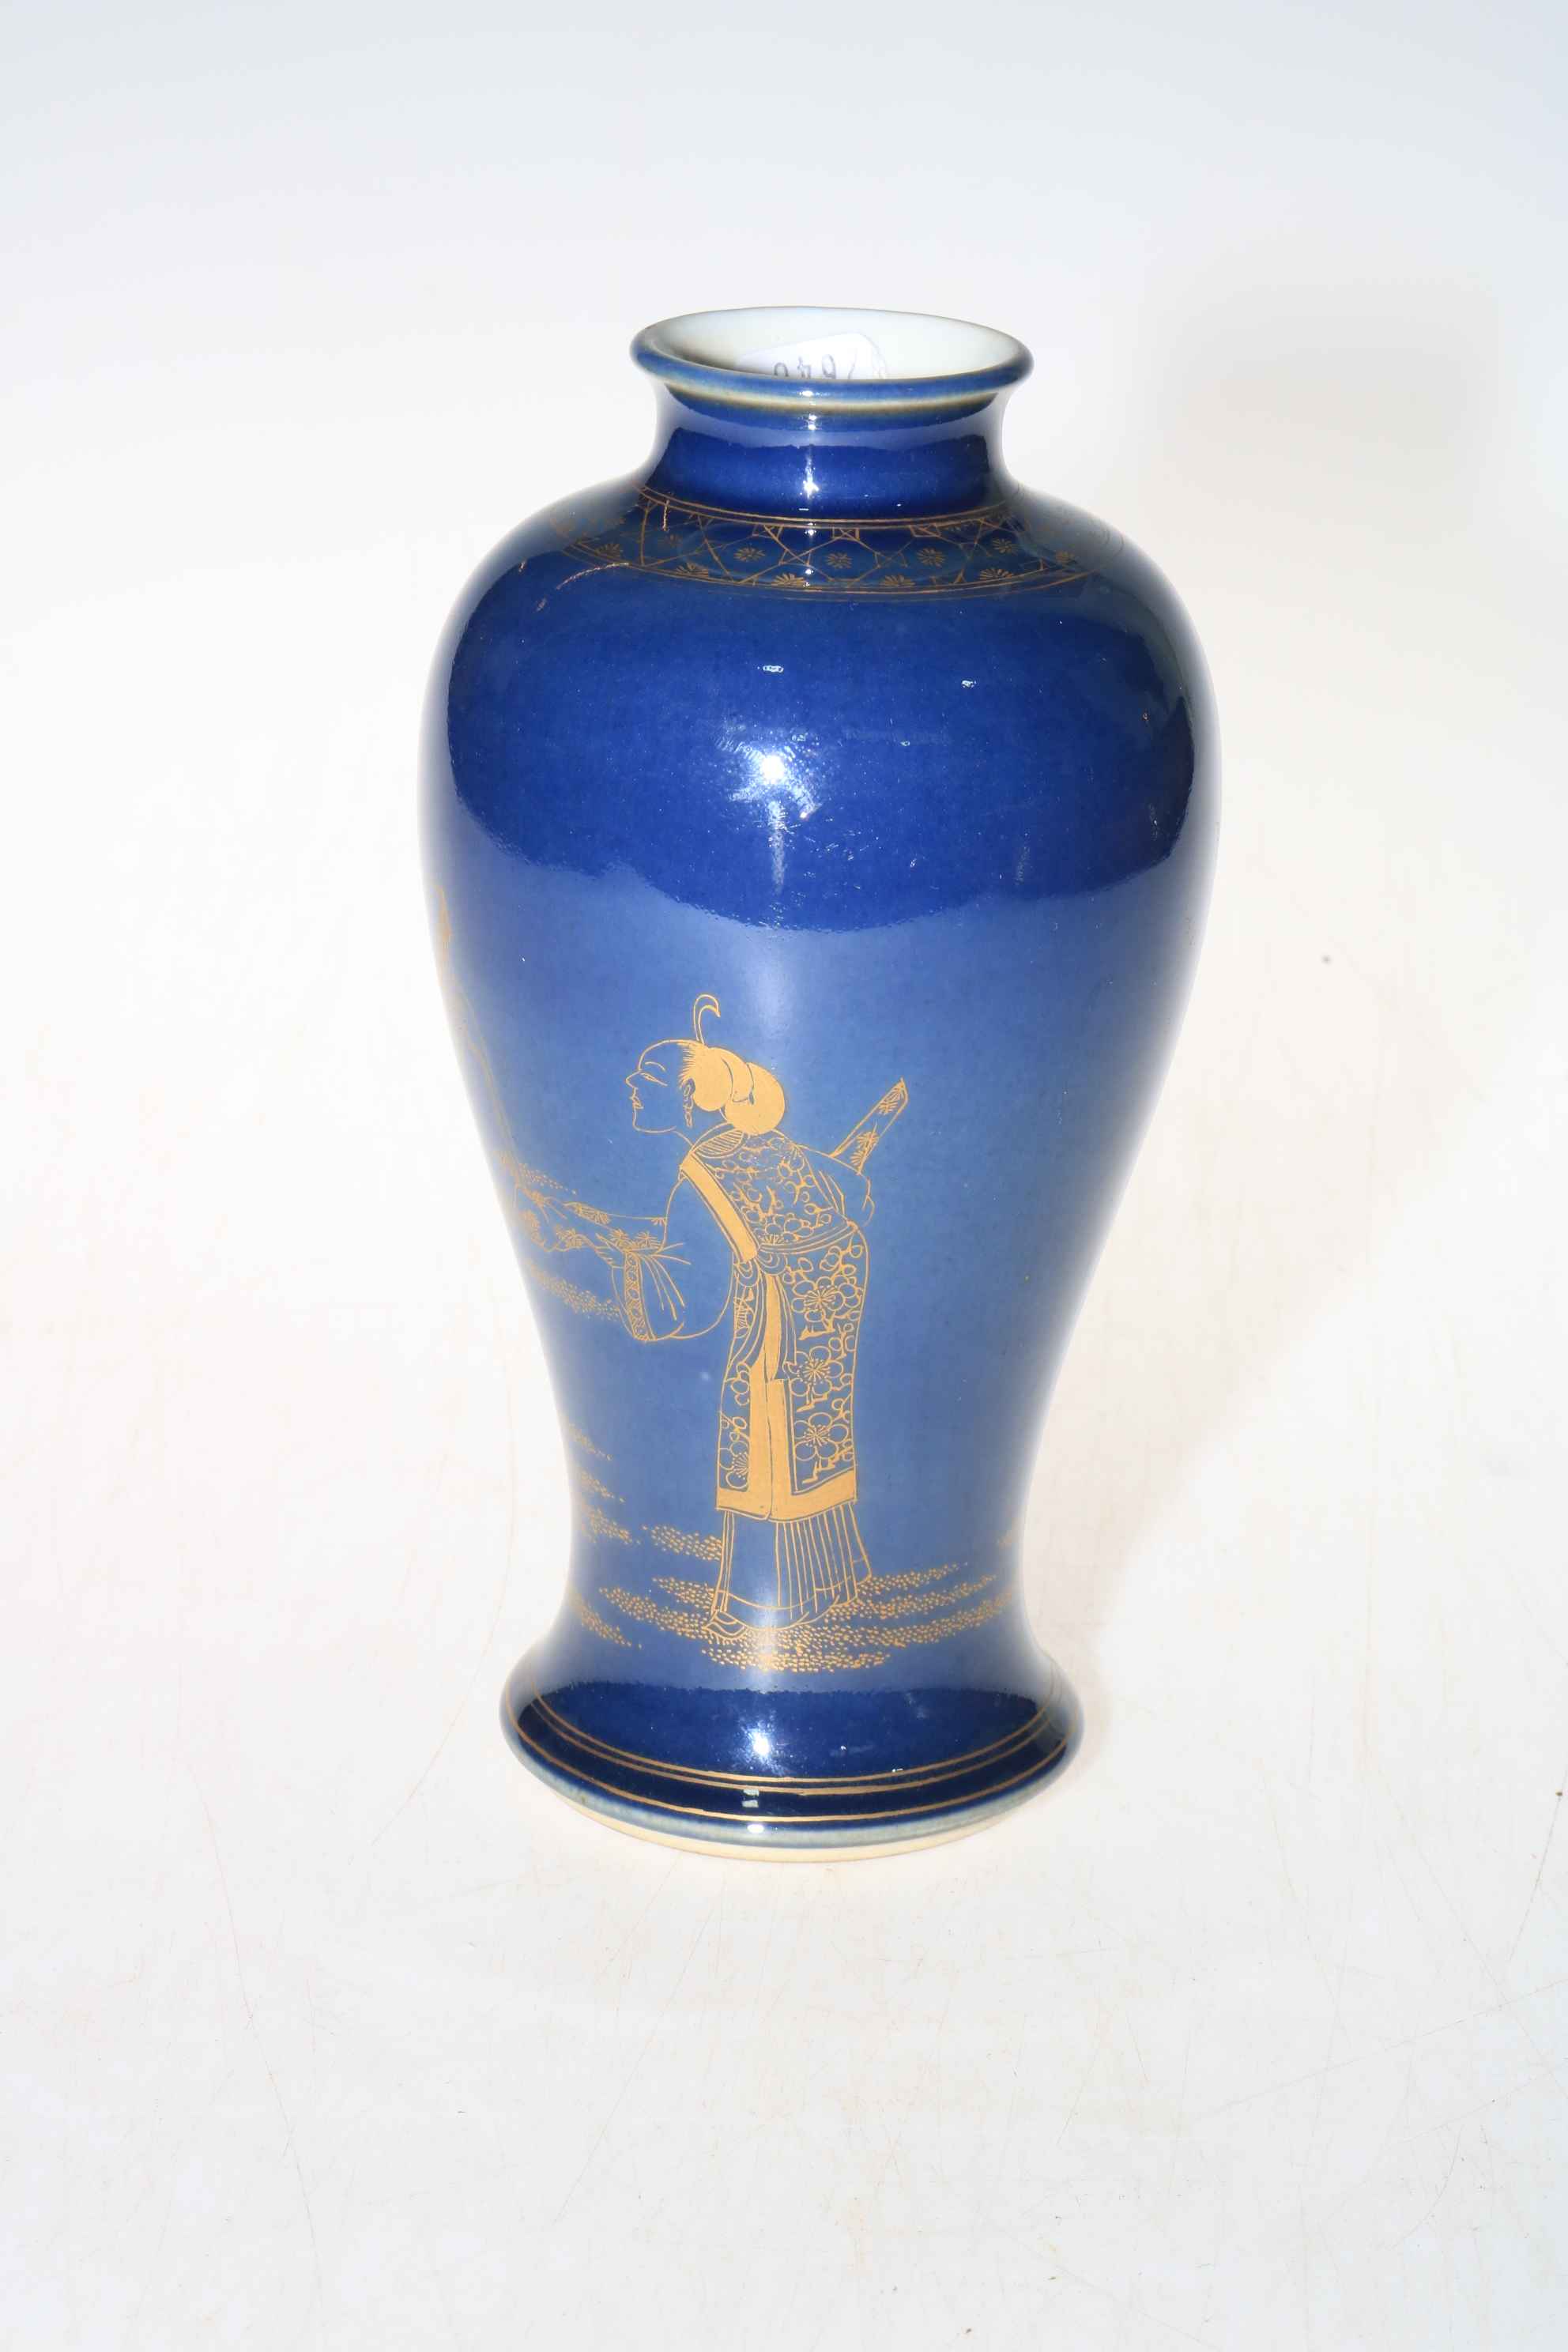 Chinese baluster vase with gilt female figure decoration on blue ground, 19.5cm. - Image 2 of 3